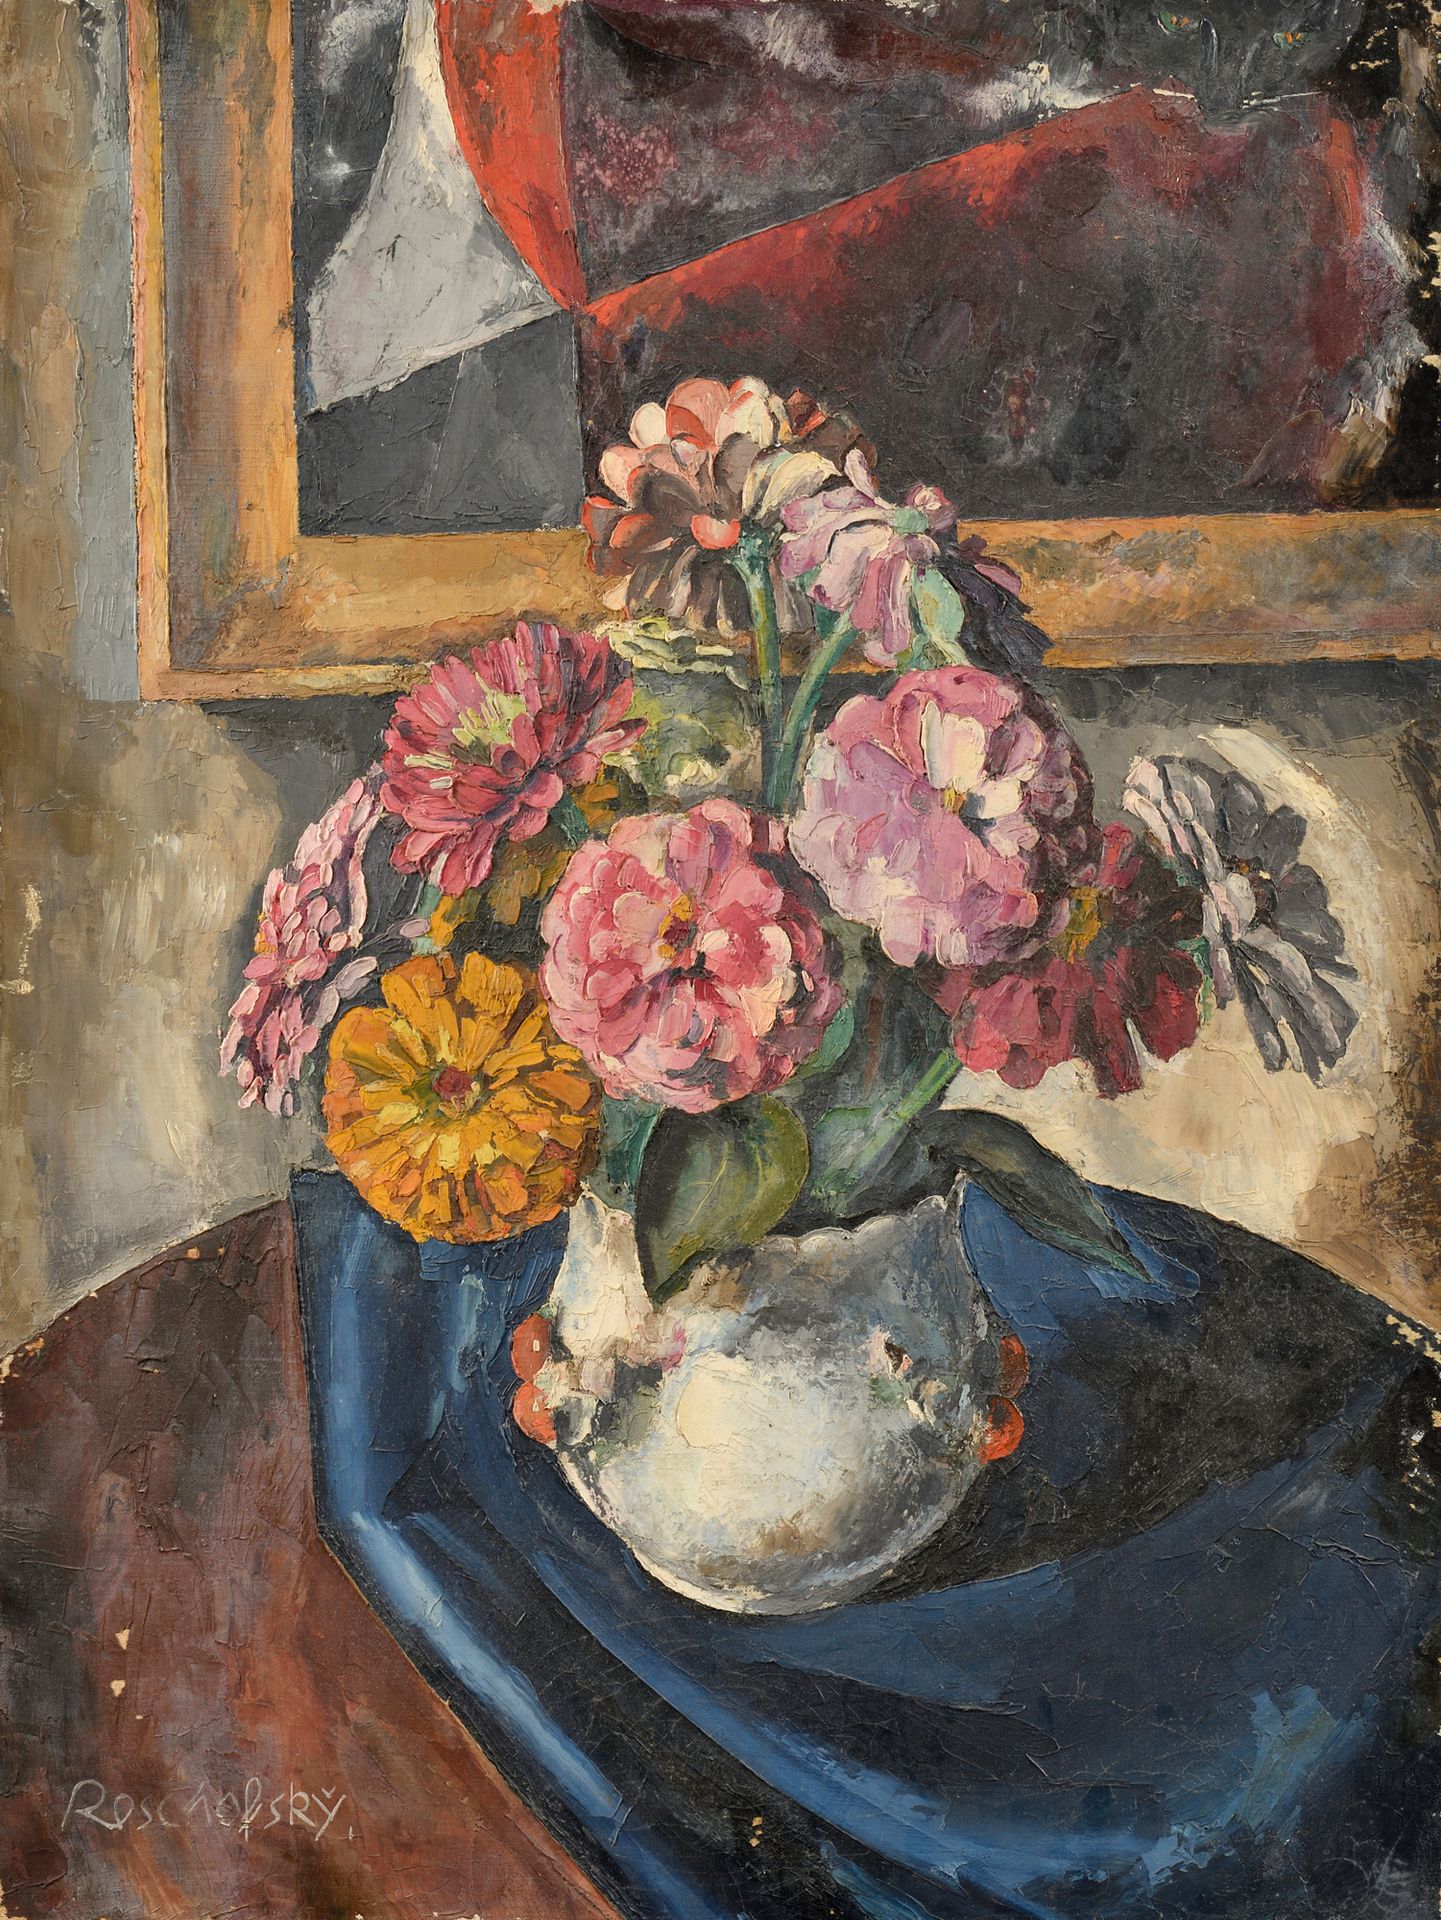 Null 雷索夫斯基-让 (1905-1998)

花瓶里的花

布面油画

左下方有签名

61 x 46 厘米



РЕСШОФСКИ Ян (1905-&hellip;